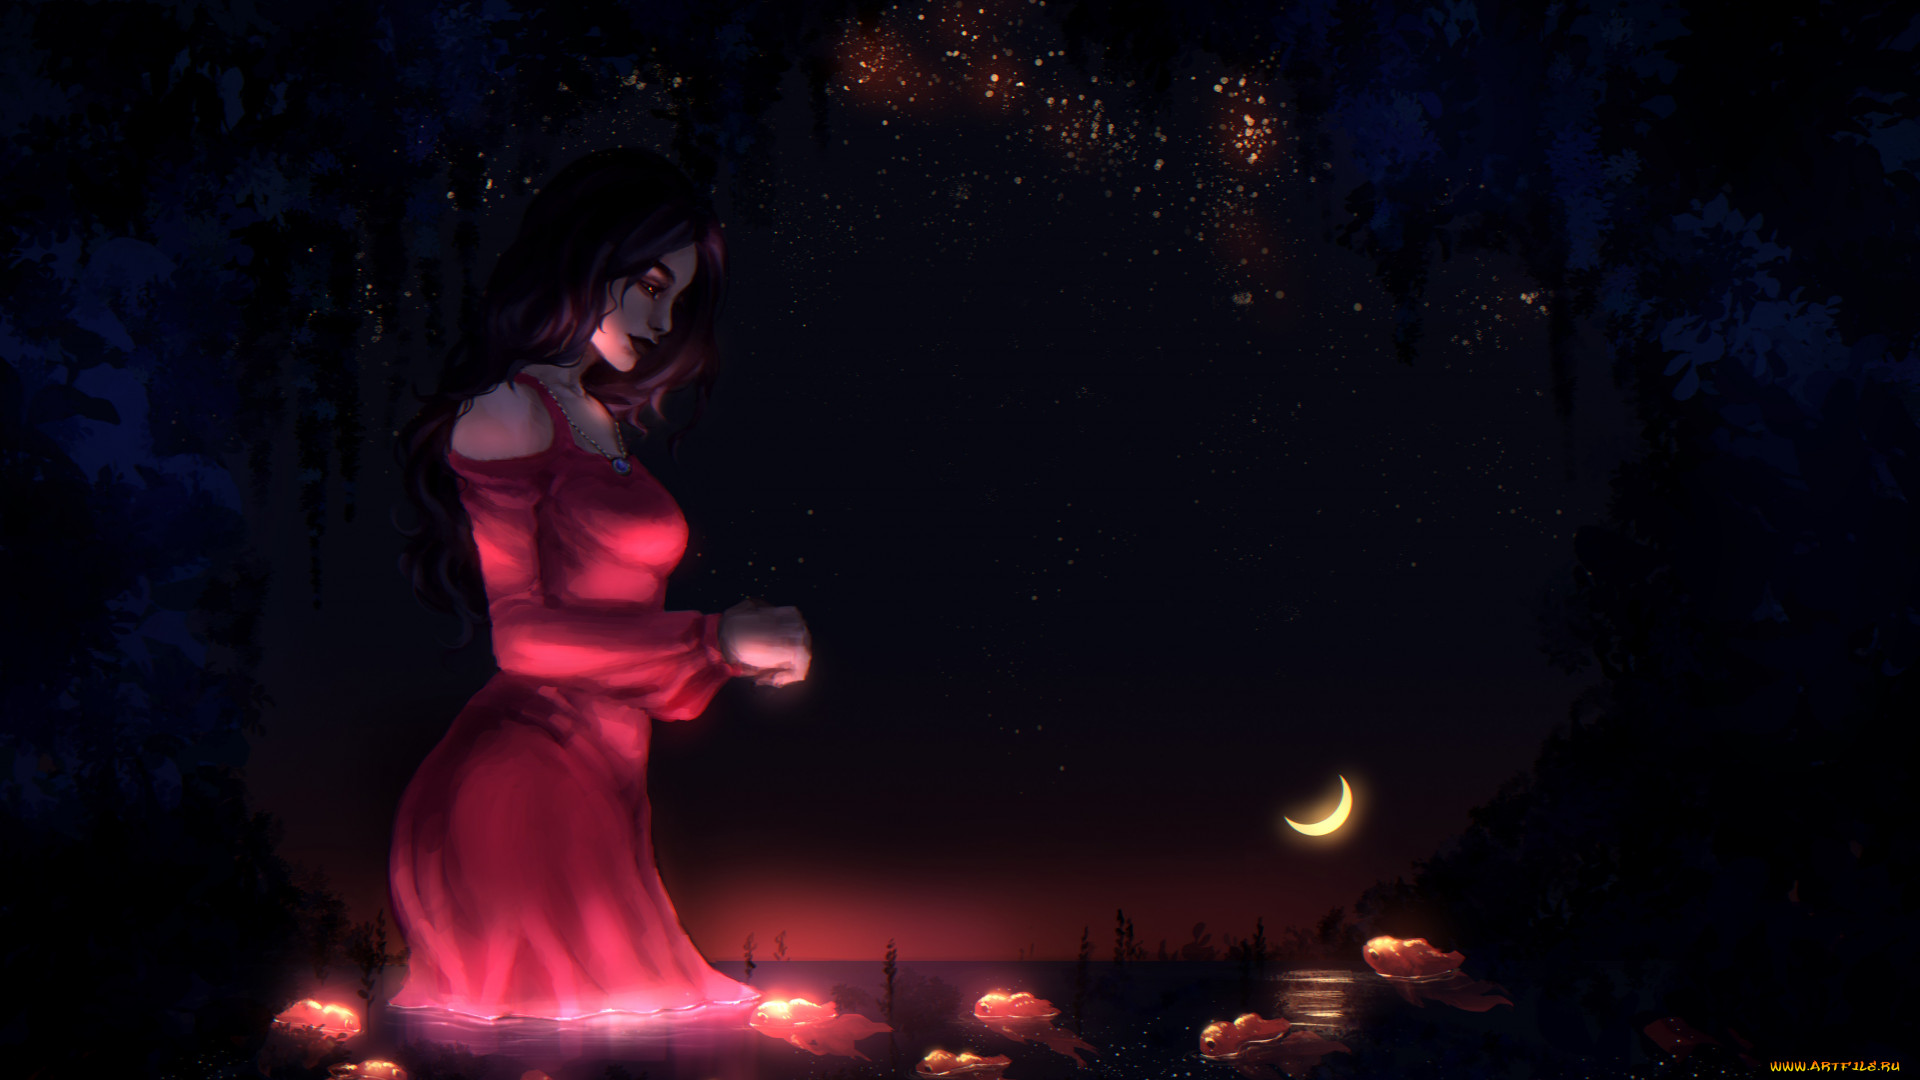 General 1920x1080 dark night artwork fantasy art fantasy girl red dress crescent moon